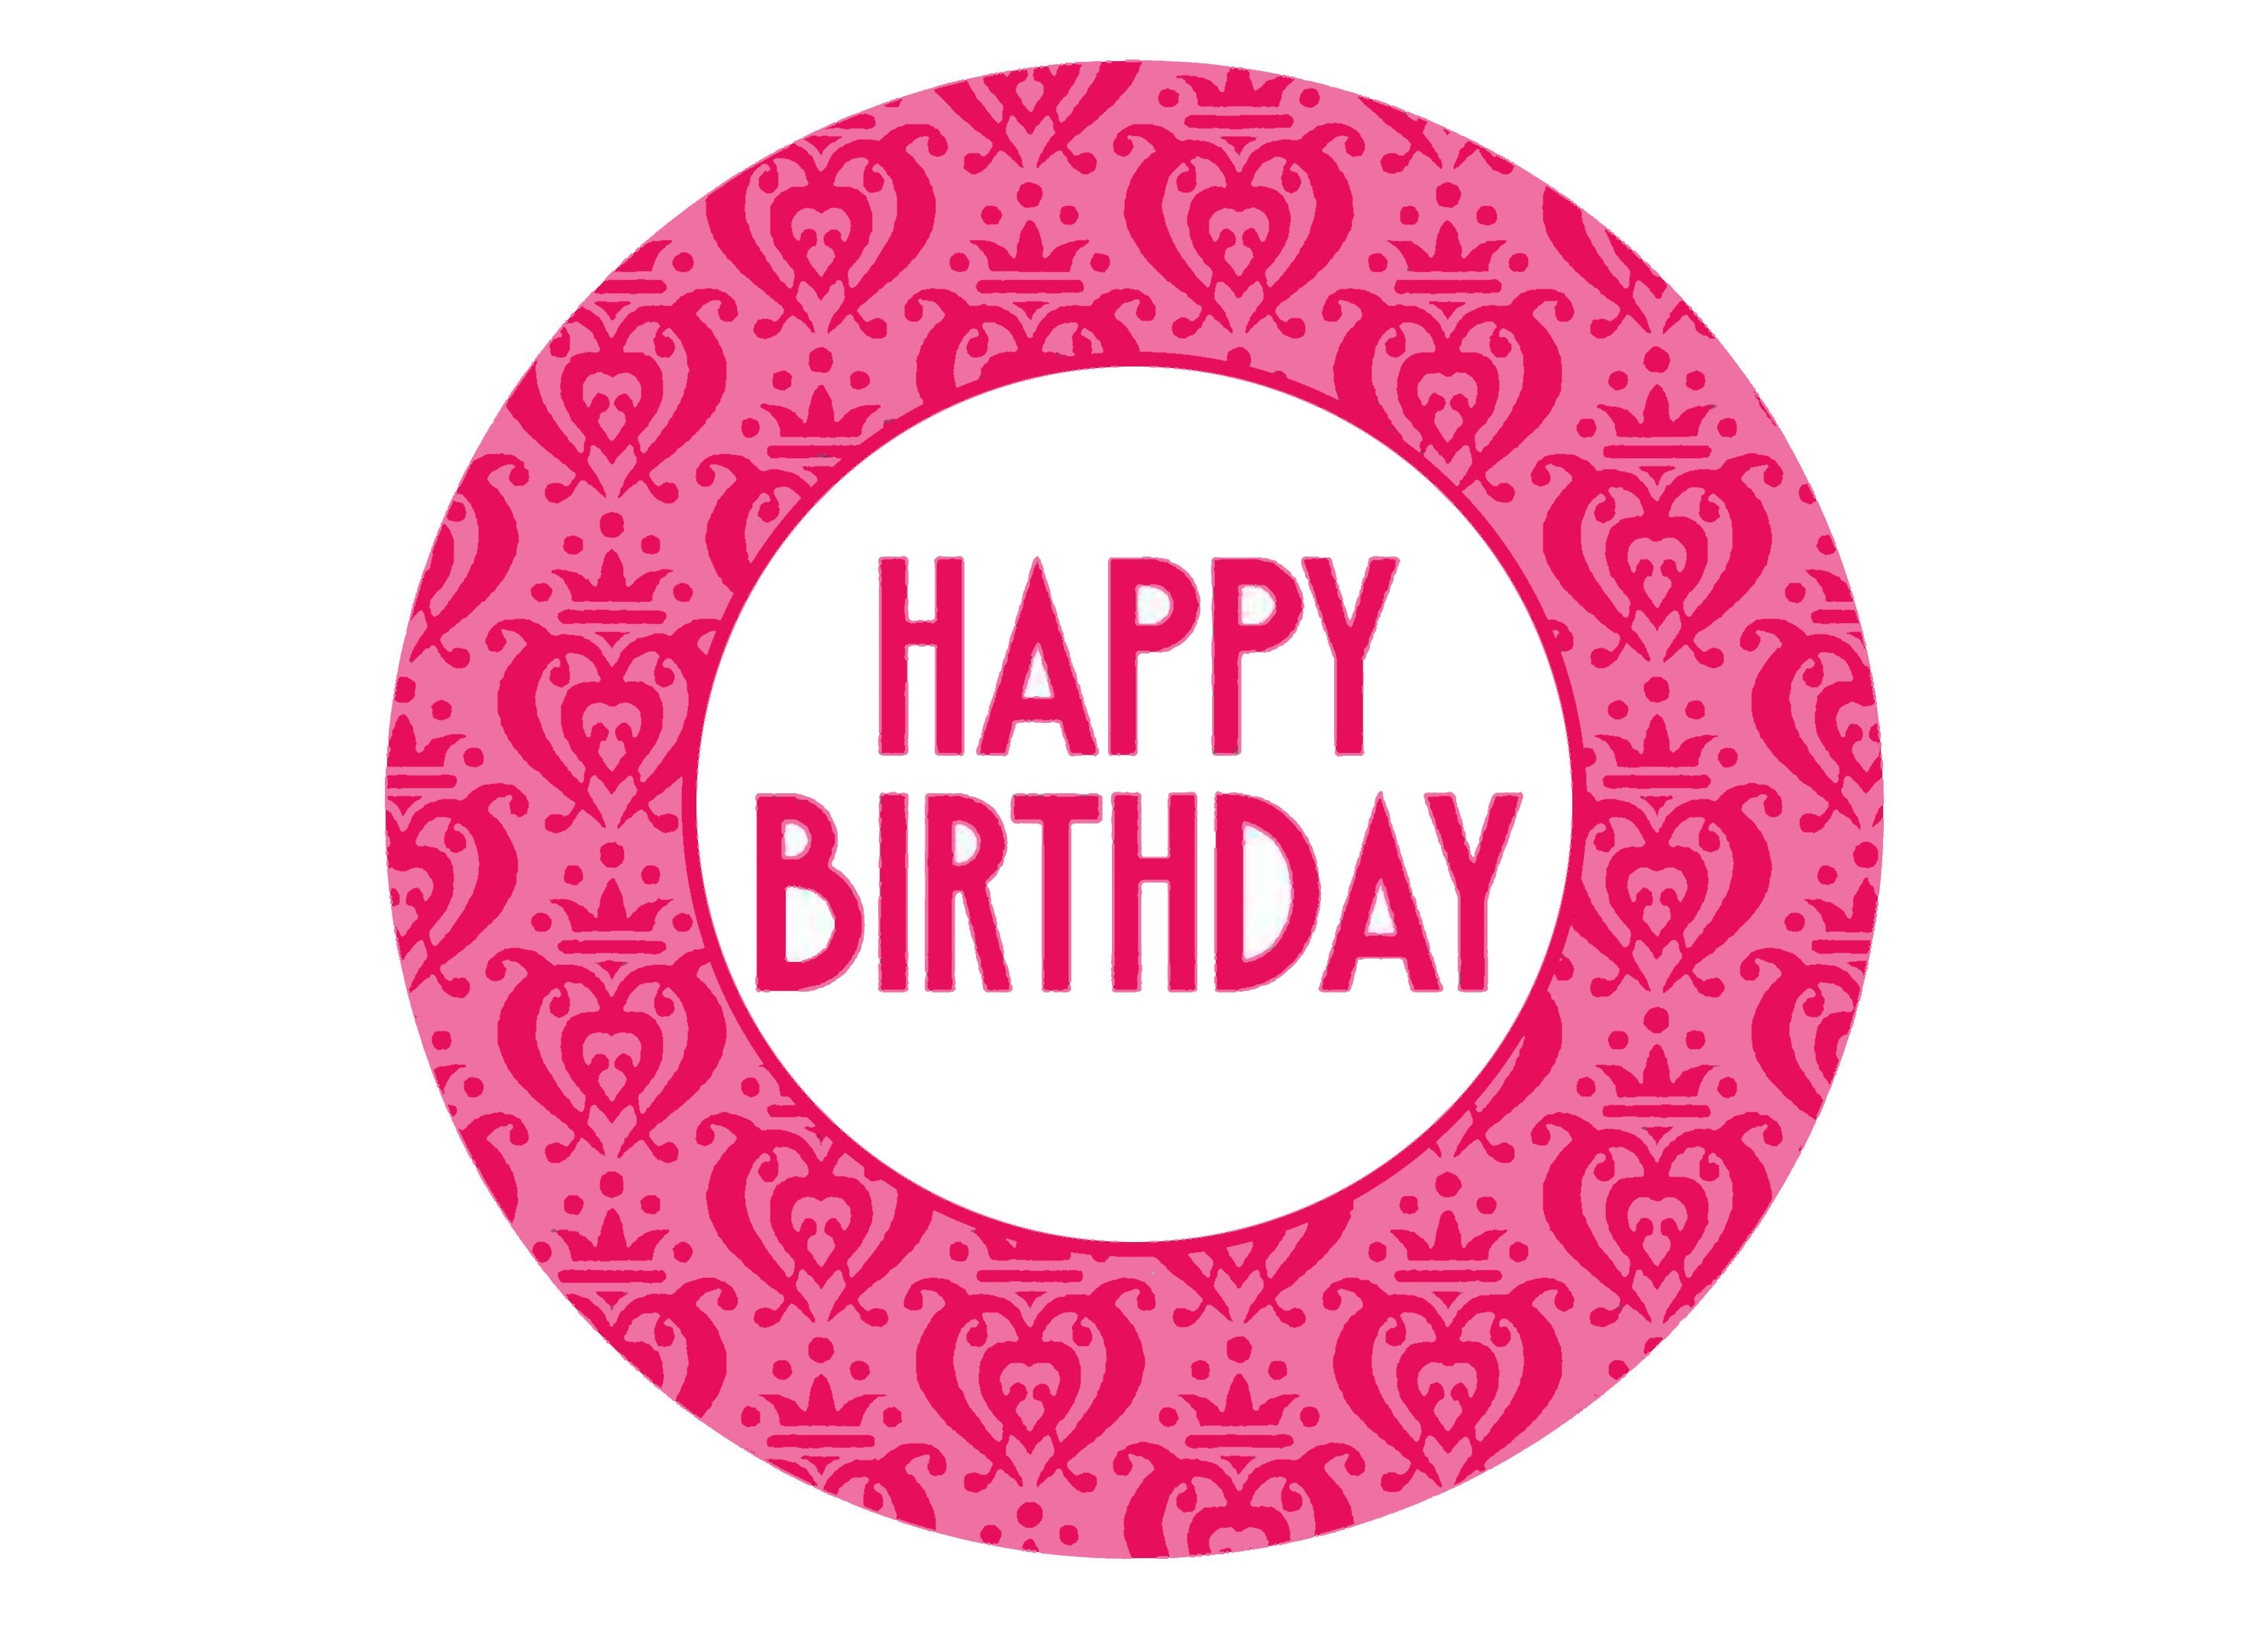 Pink Happy Birthday round cake topper